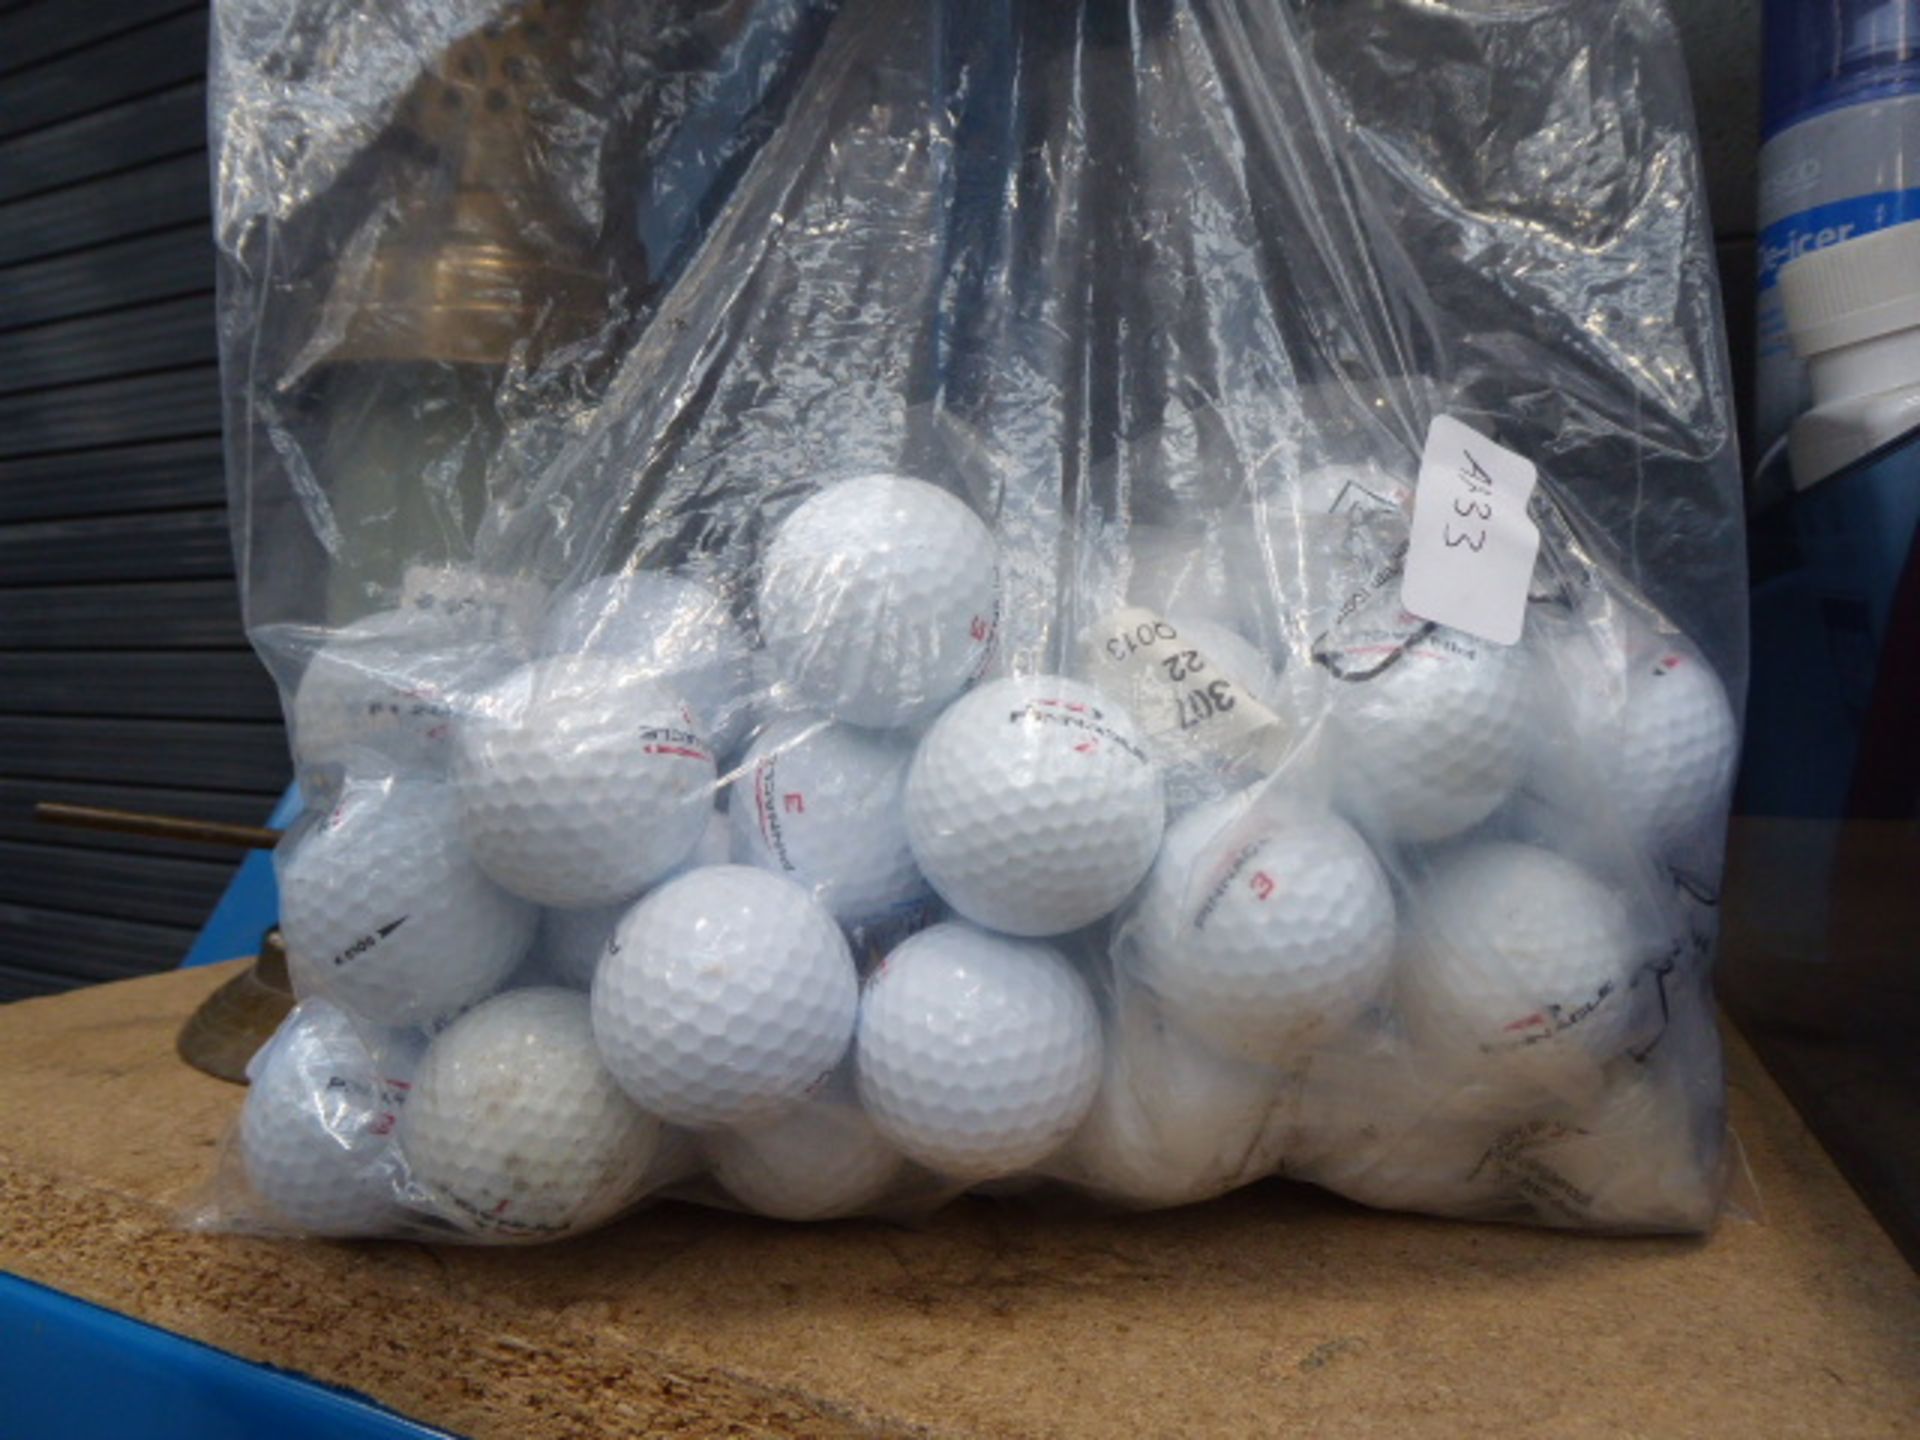 Samll bag of golf balls